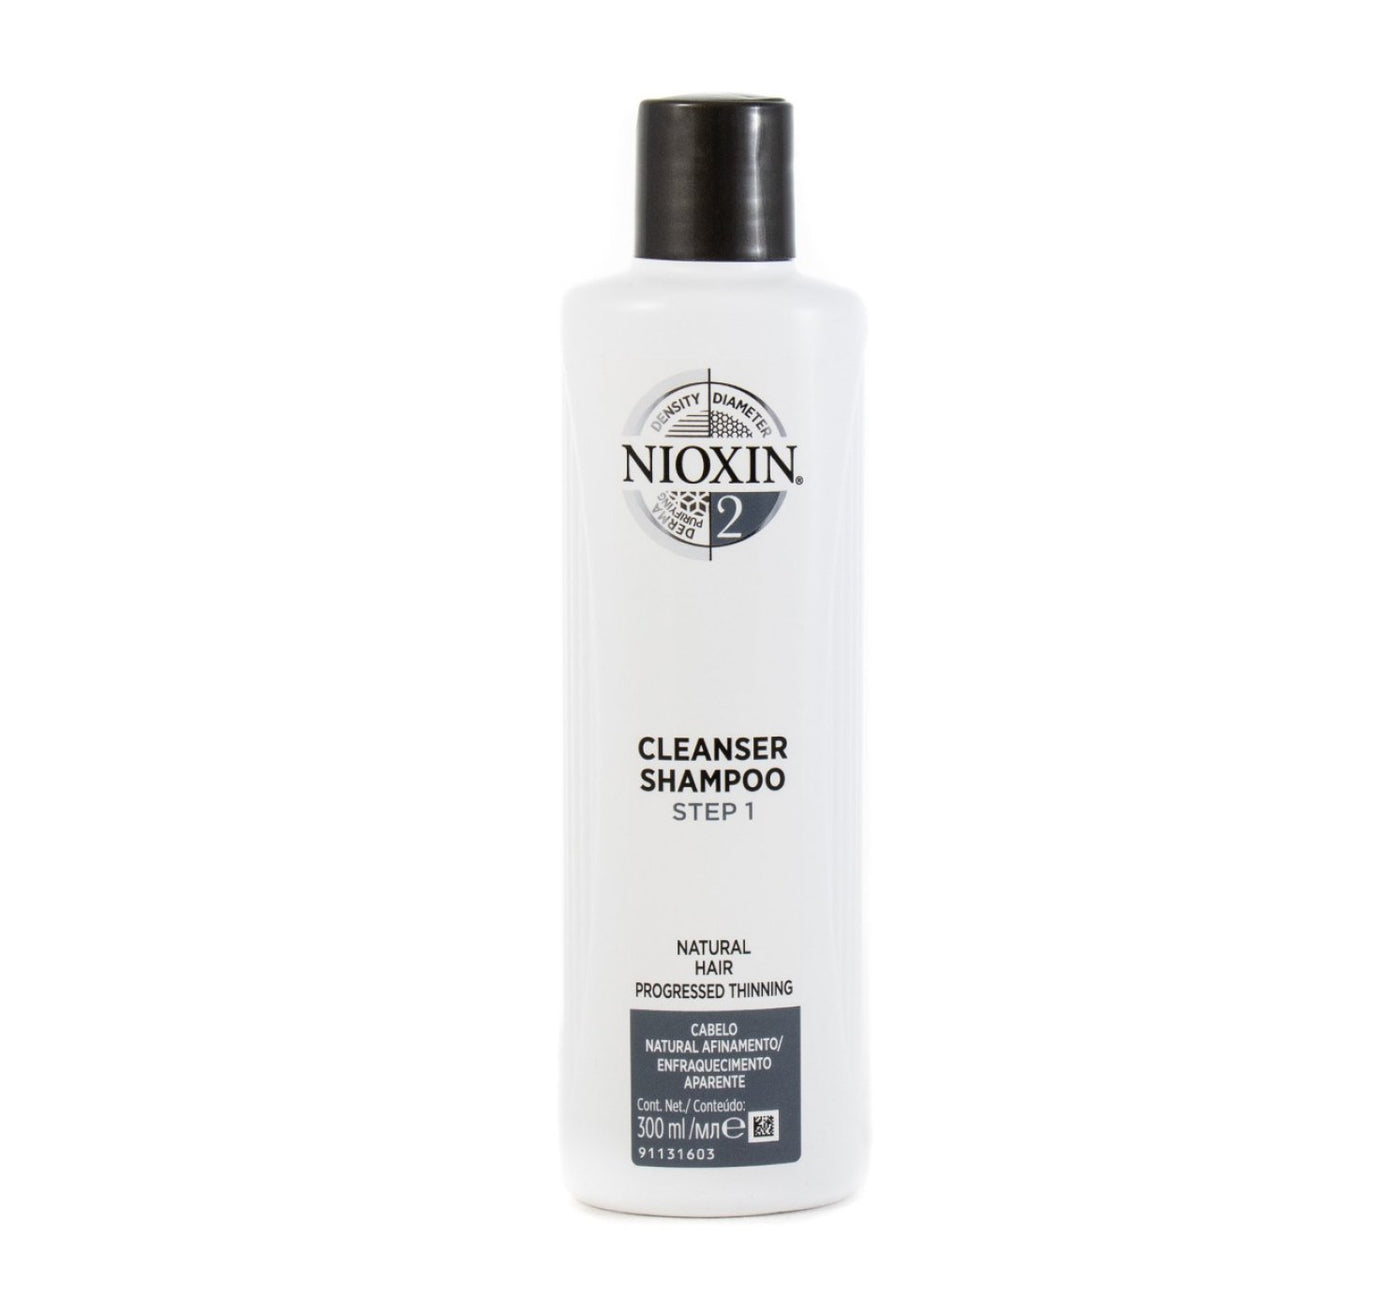 Nioxin System 6 Cleanser Shampoo 300ml - Salon Warehouse